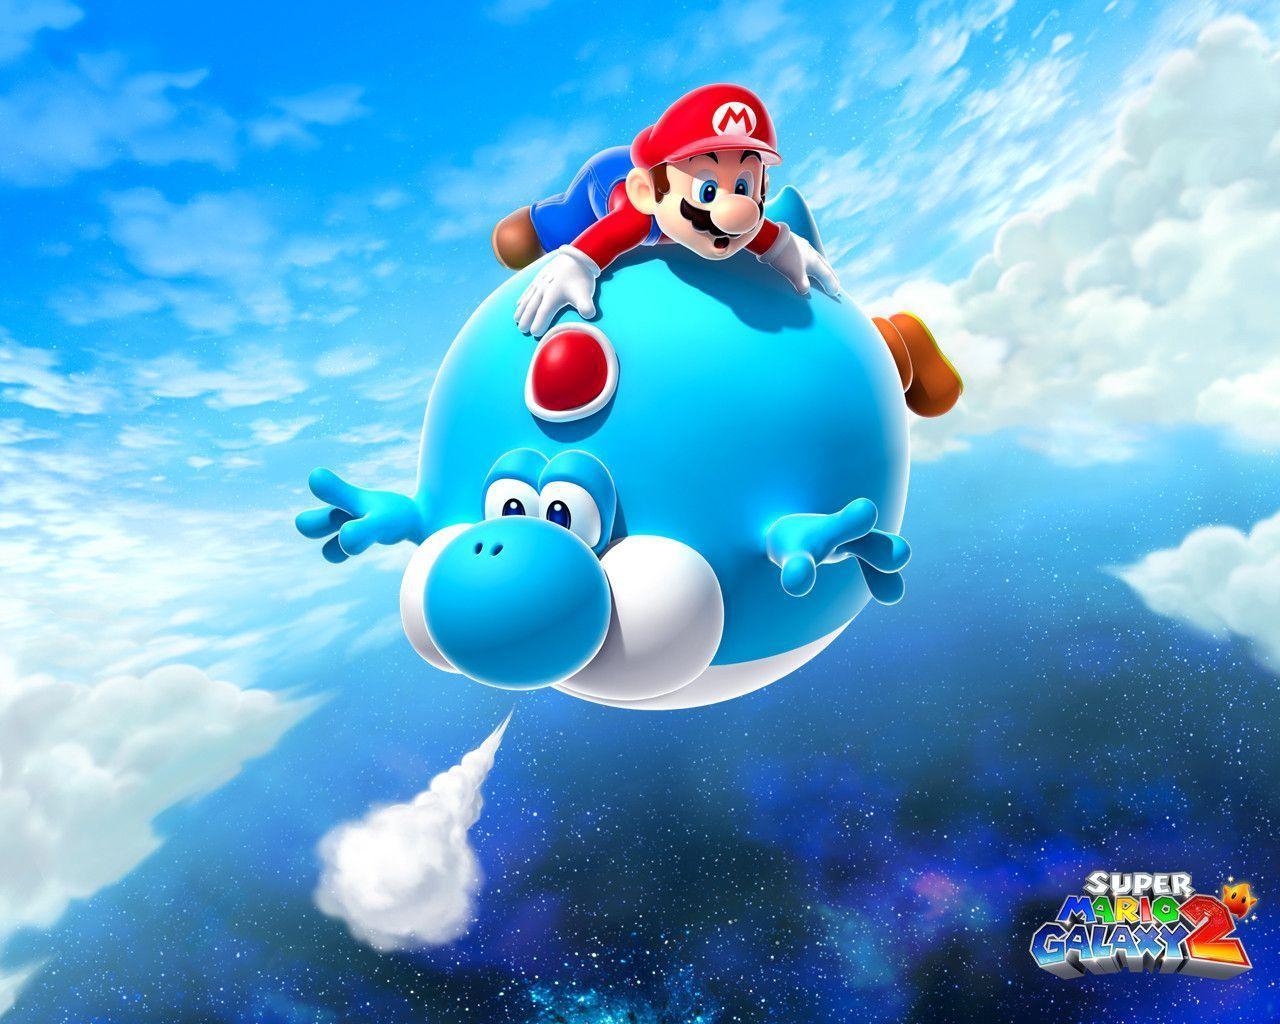 Super Mario Galaxy 2 HD Wallpaper and Background